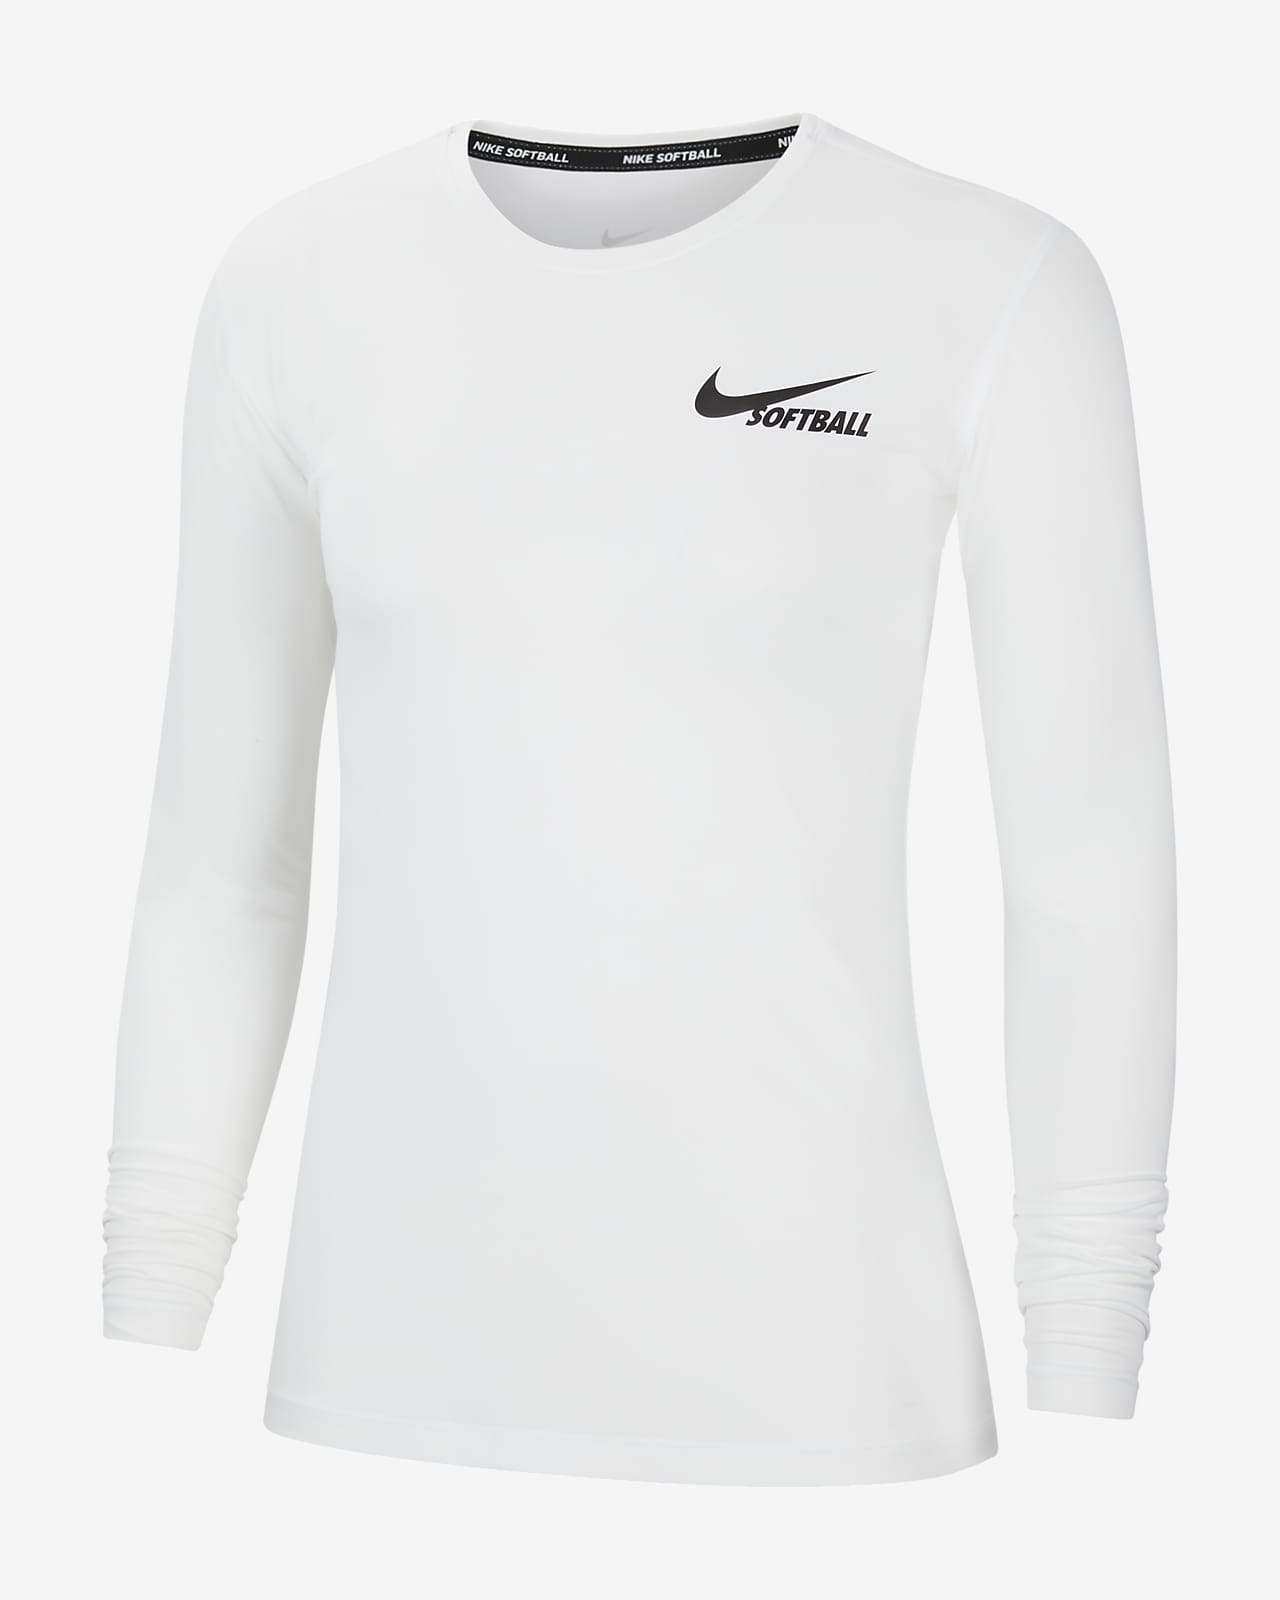 Buy > long sleeve nike shirt dri fit > in stock